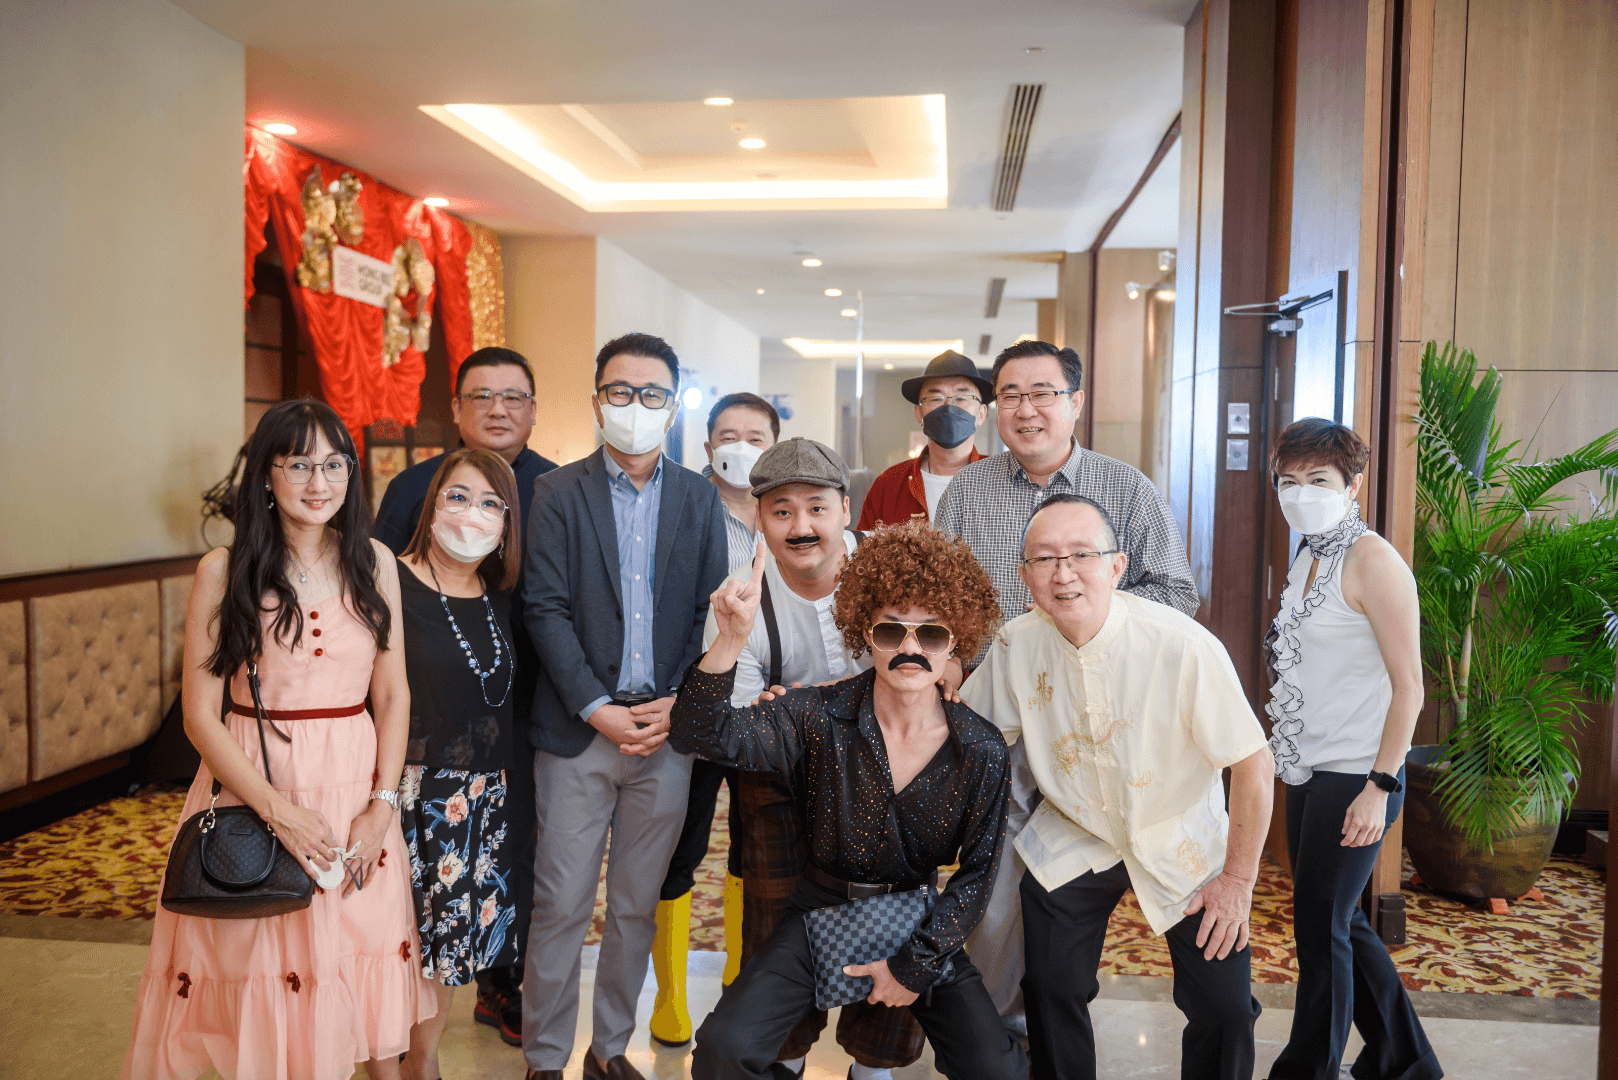 Hong Bee Hardware’s 70th Anniversary Celebration